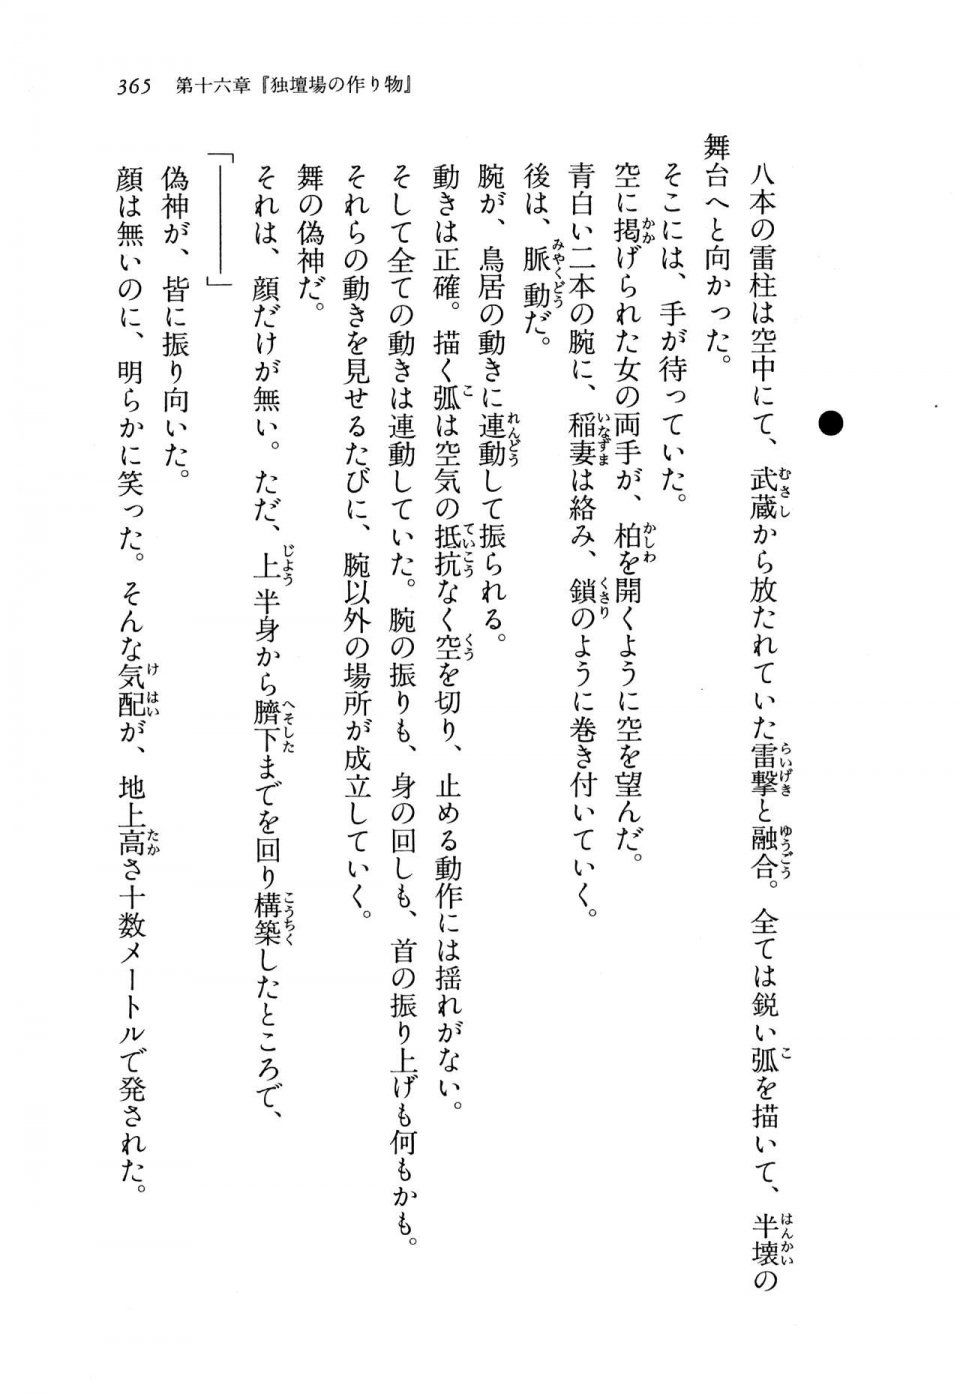 Kyoukai Senjou no Horizon BD Special Mininovel Vol 8(4B) - Photo #369